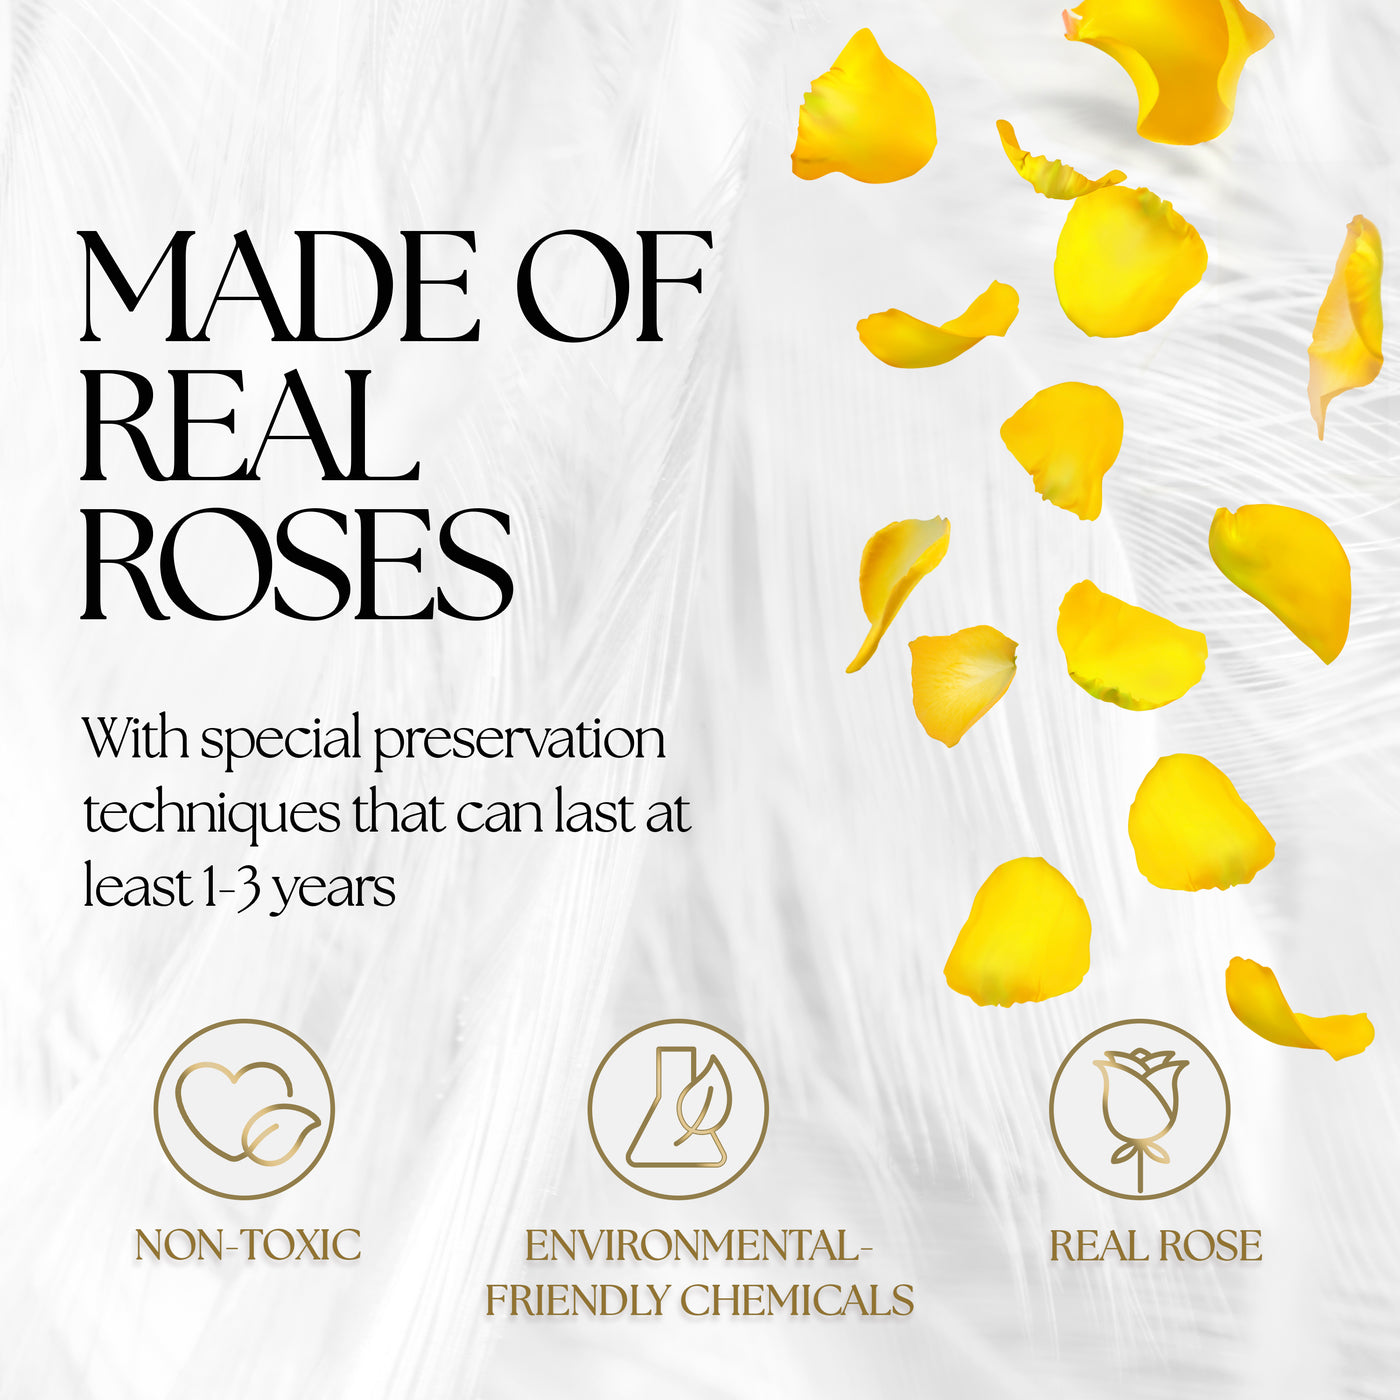 Immortal Love Heart Box |27 Yellow Roses